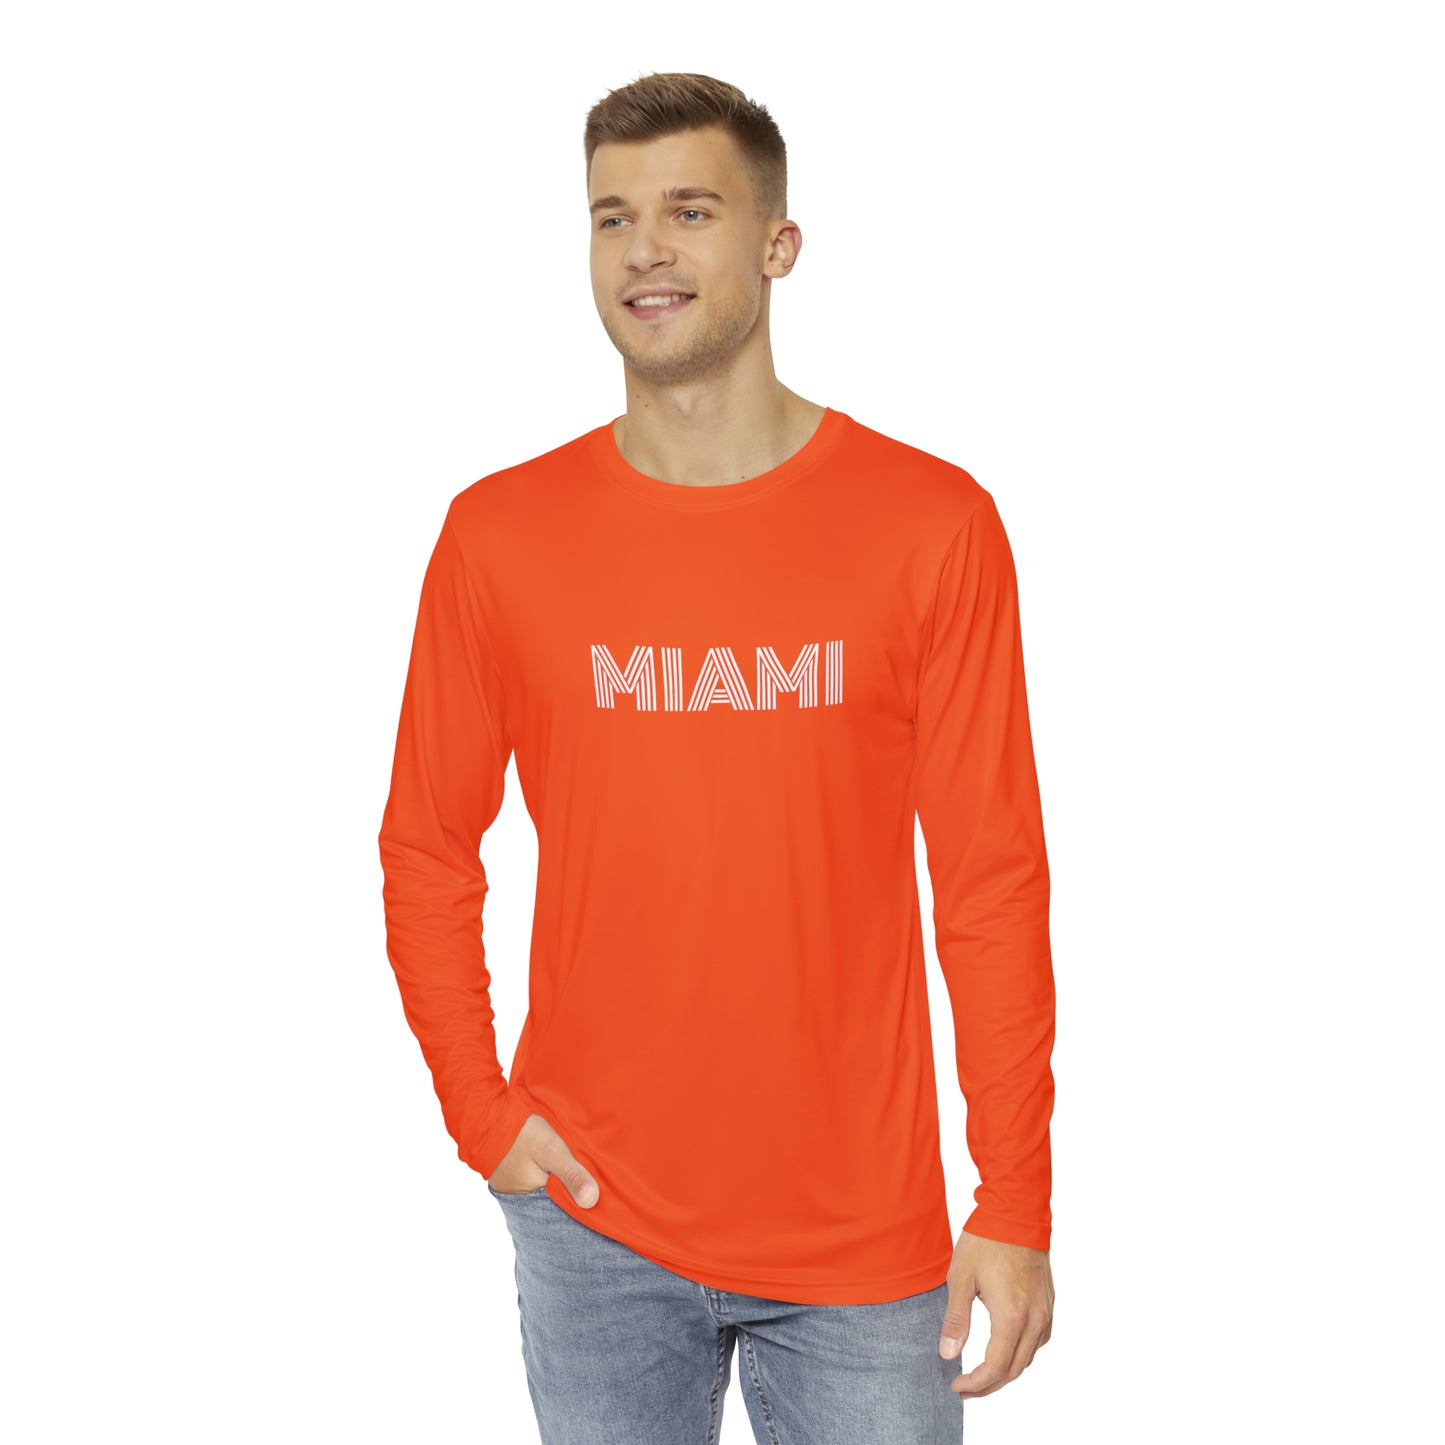 MIAMI Men's Long Sleeve Shirt, Orange